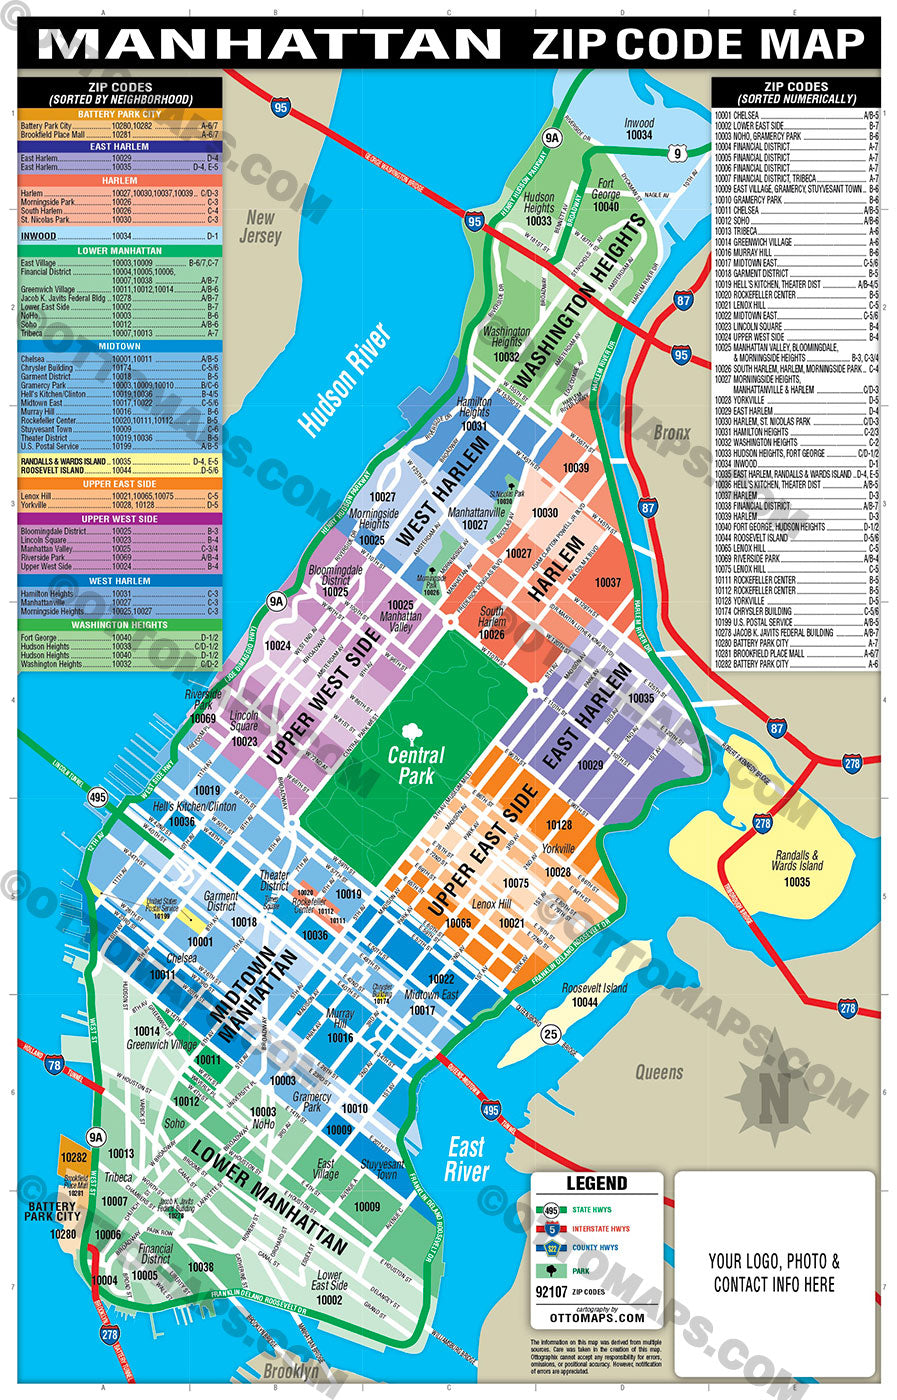 riverside square mall map